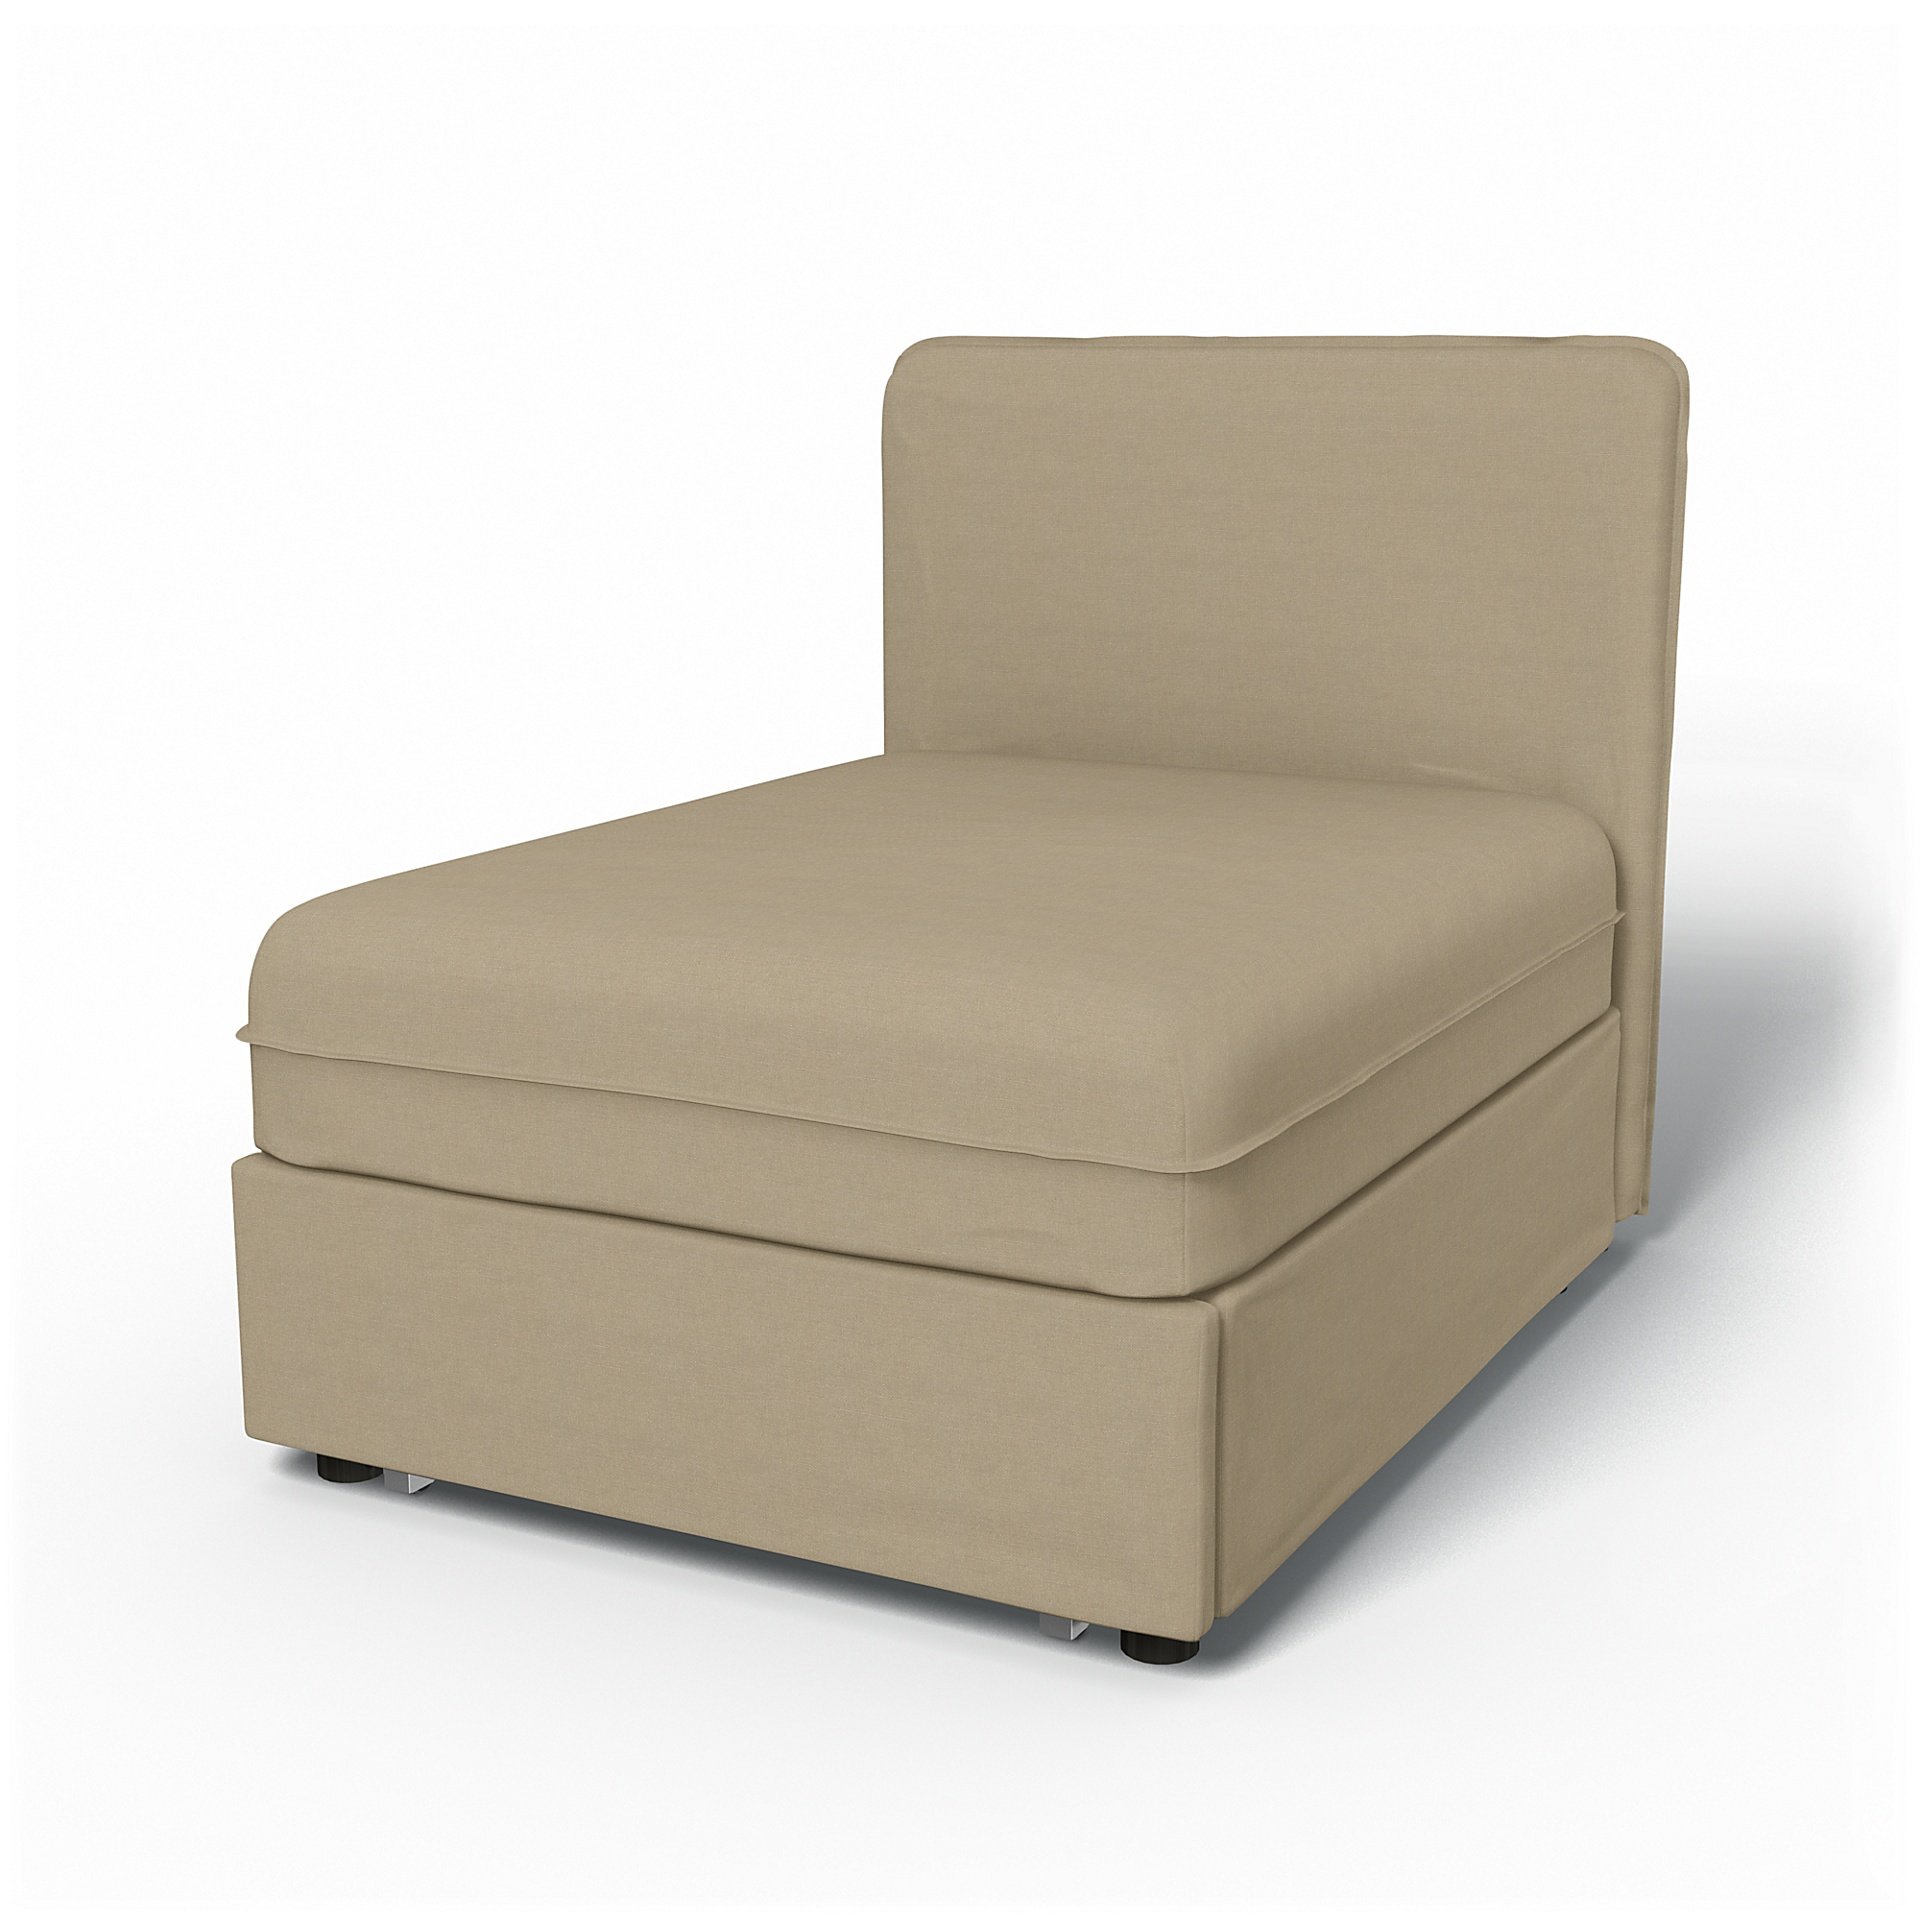 IKEA - Vallentuna Seat Module with Low Back Sofa Bed Cover 80x100 cm 32x39in, Tan, Linen - Bemz